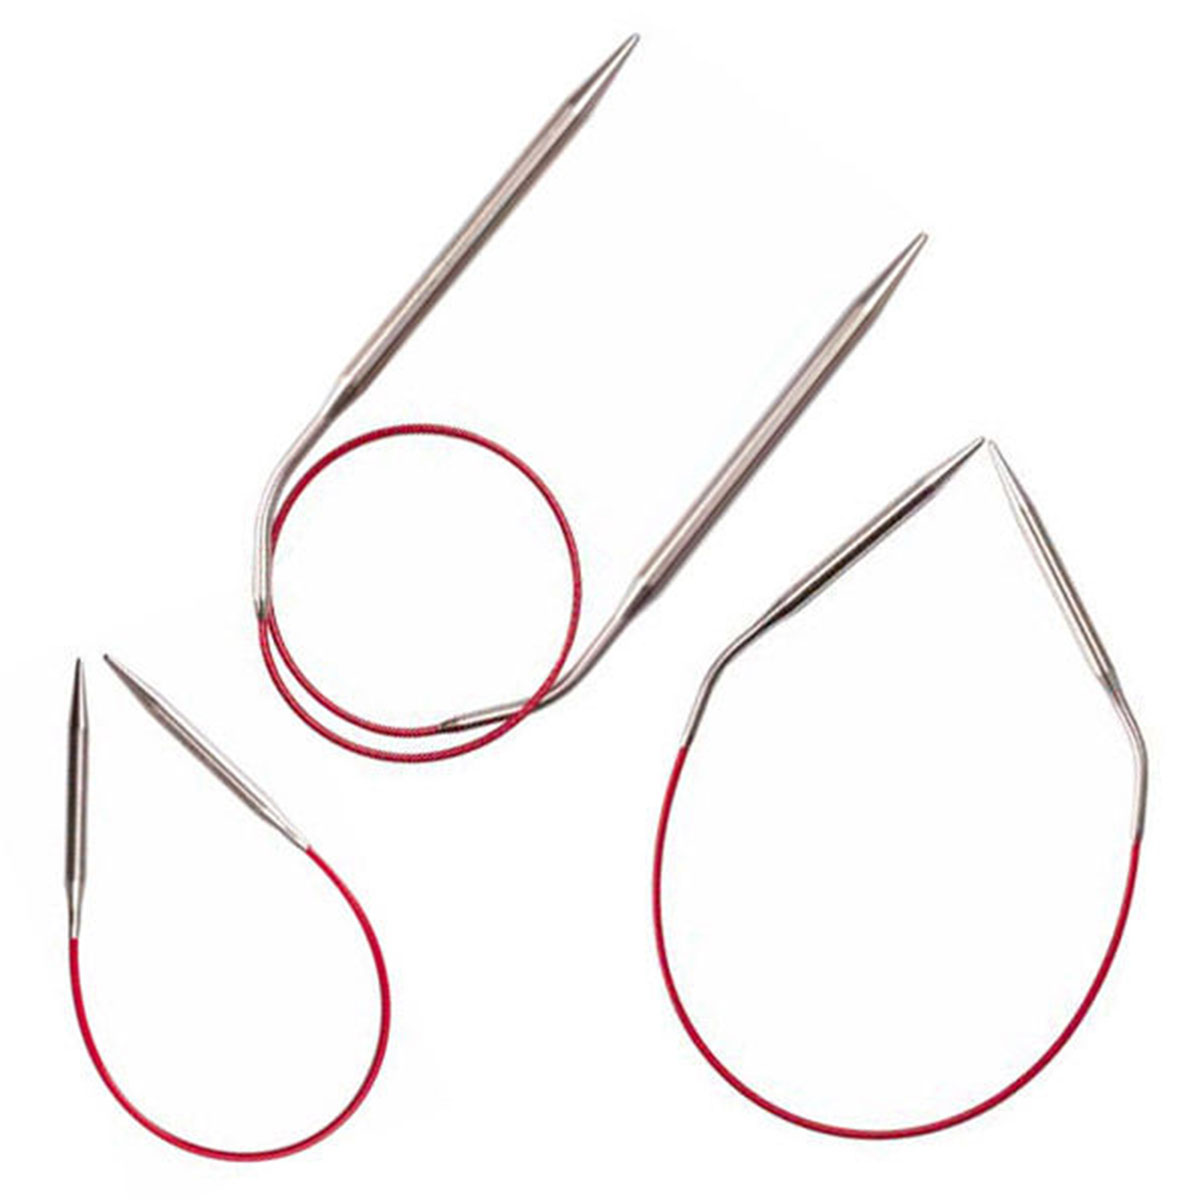 ChiaoGoo Knit RED Circular Needles - US 1.5 (2.5mm) - 9 Needles